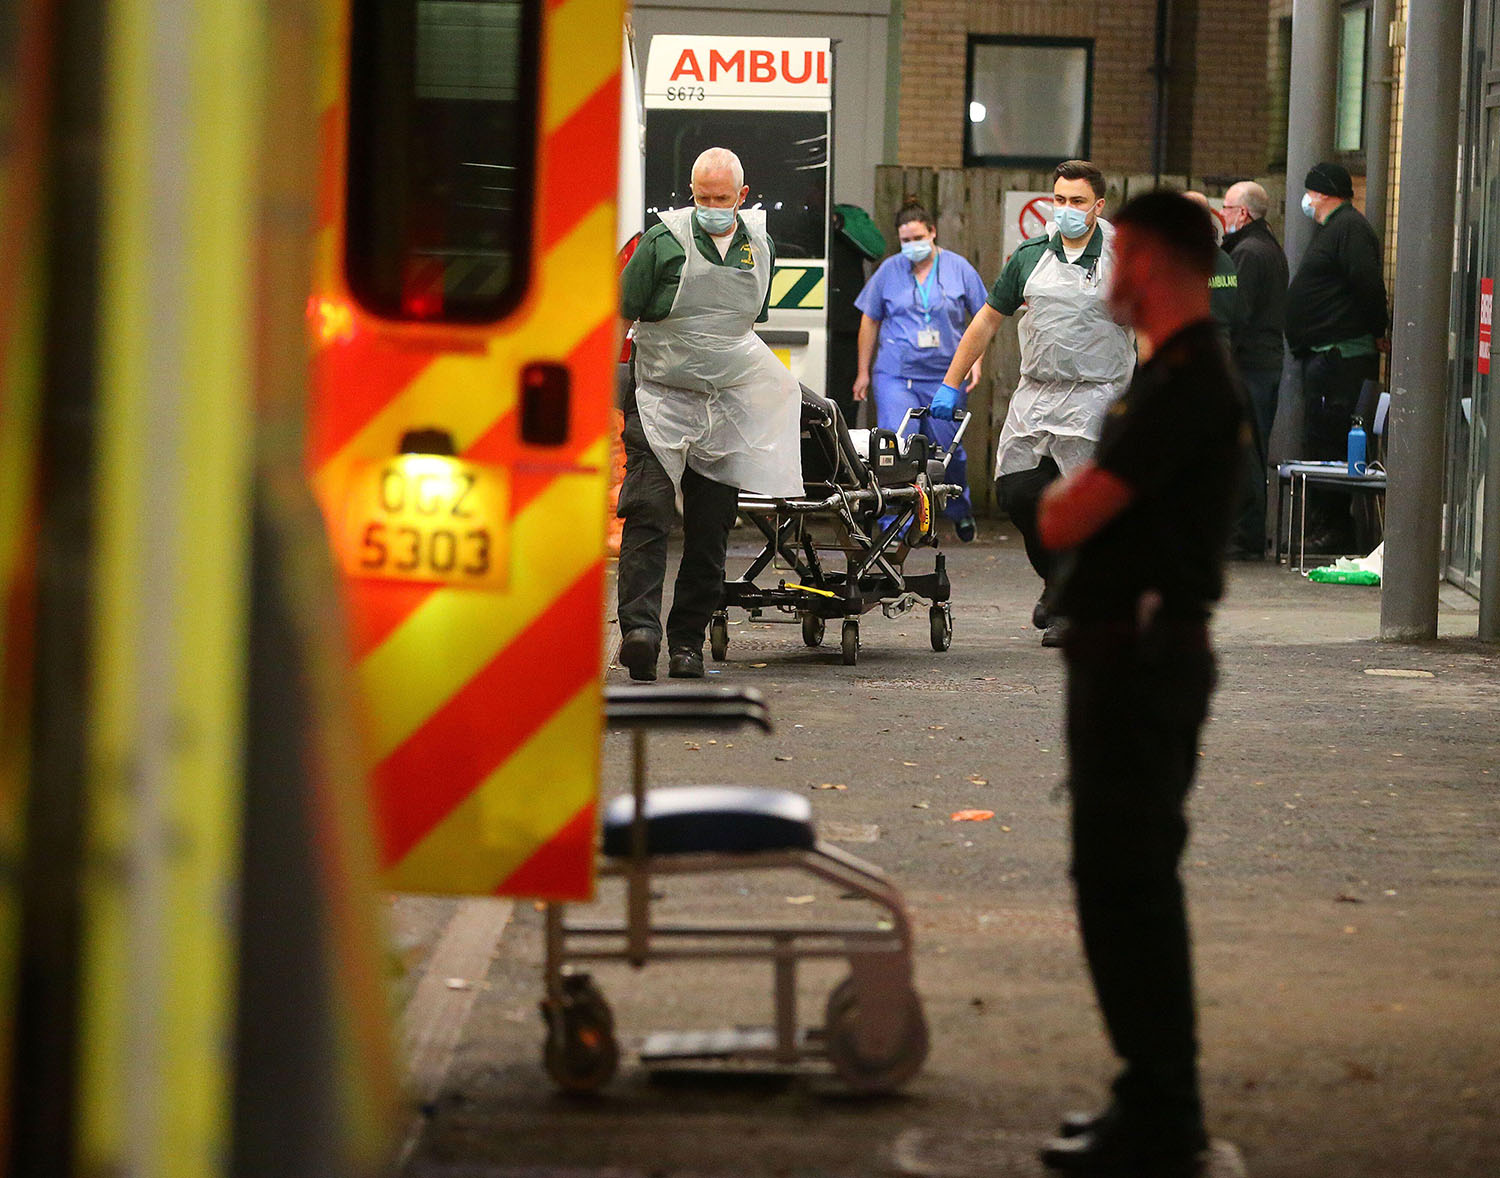 ambulances queuing up outside hospital